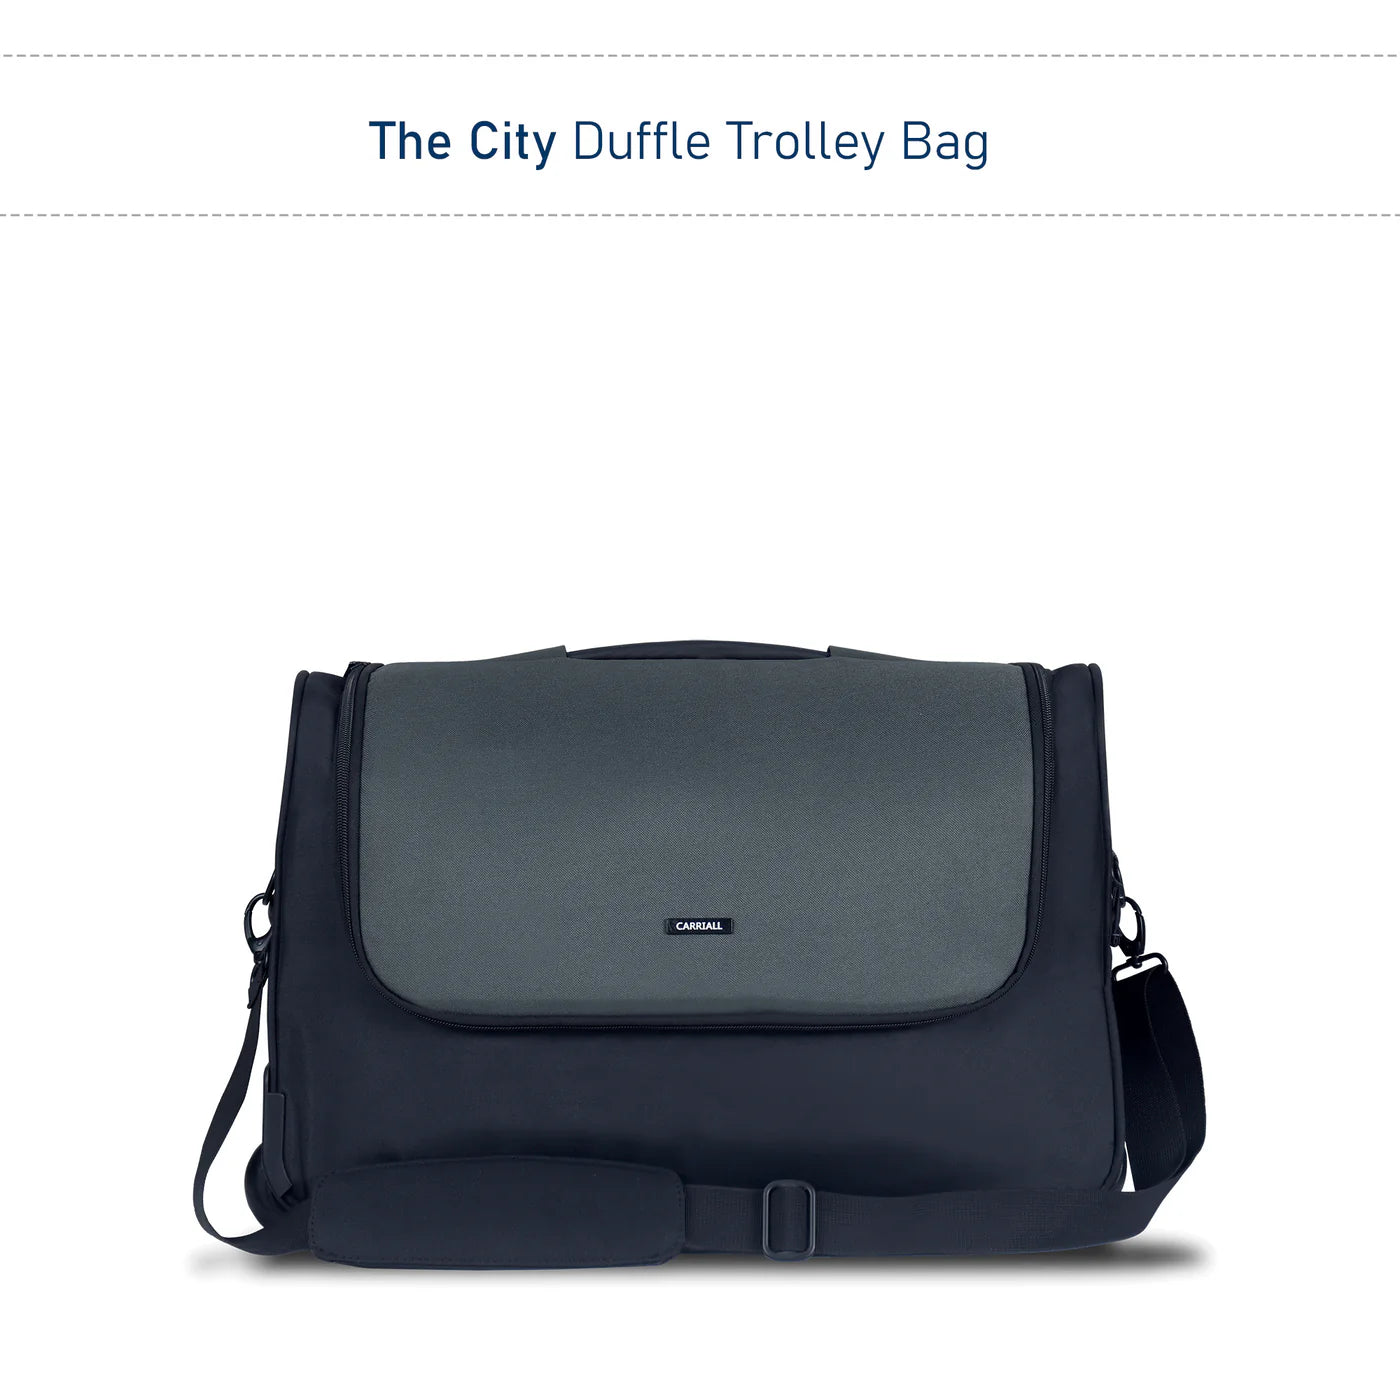 City Duffle Trolley Bag